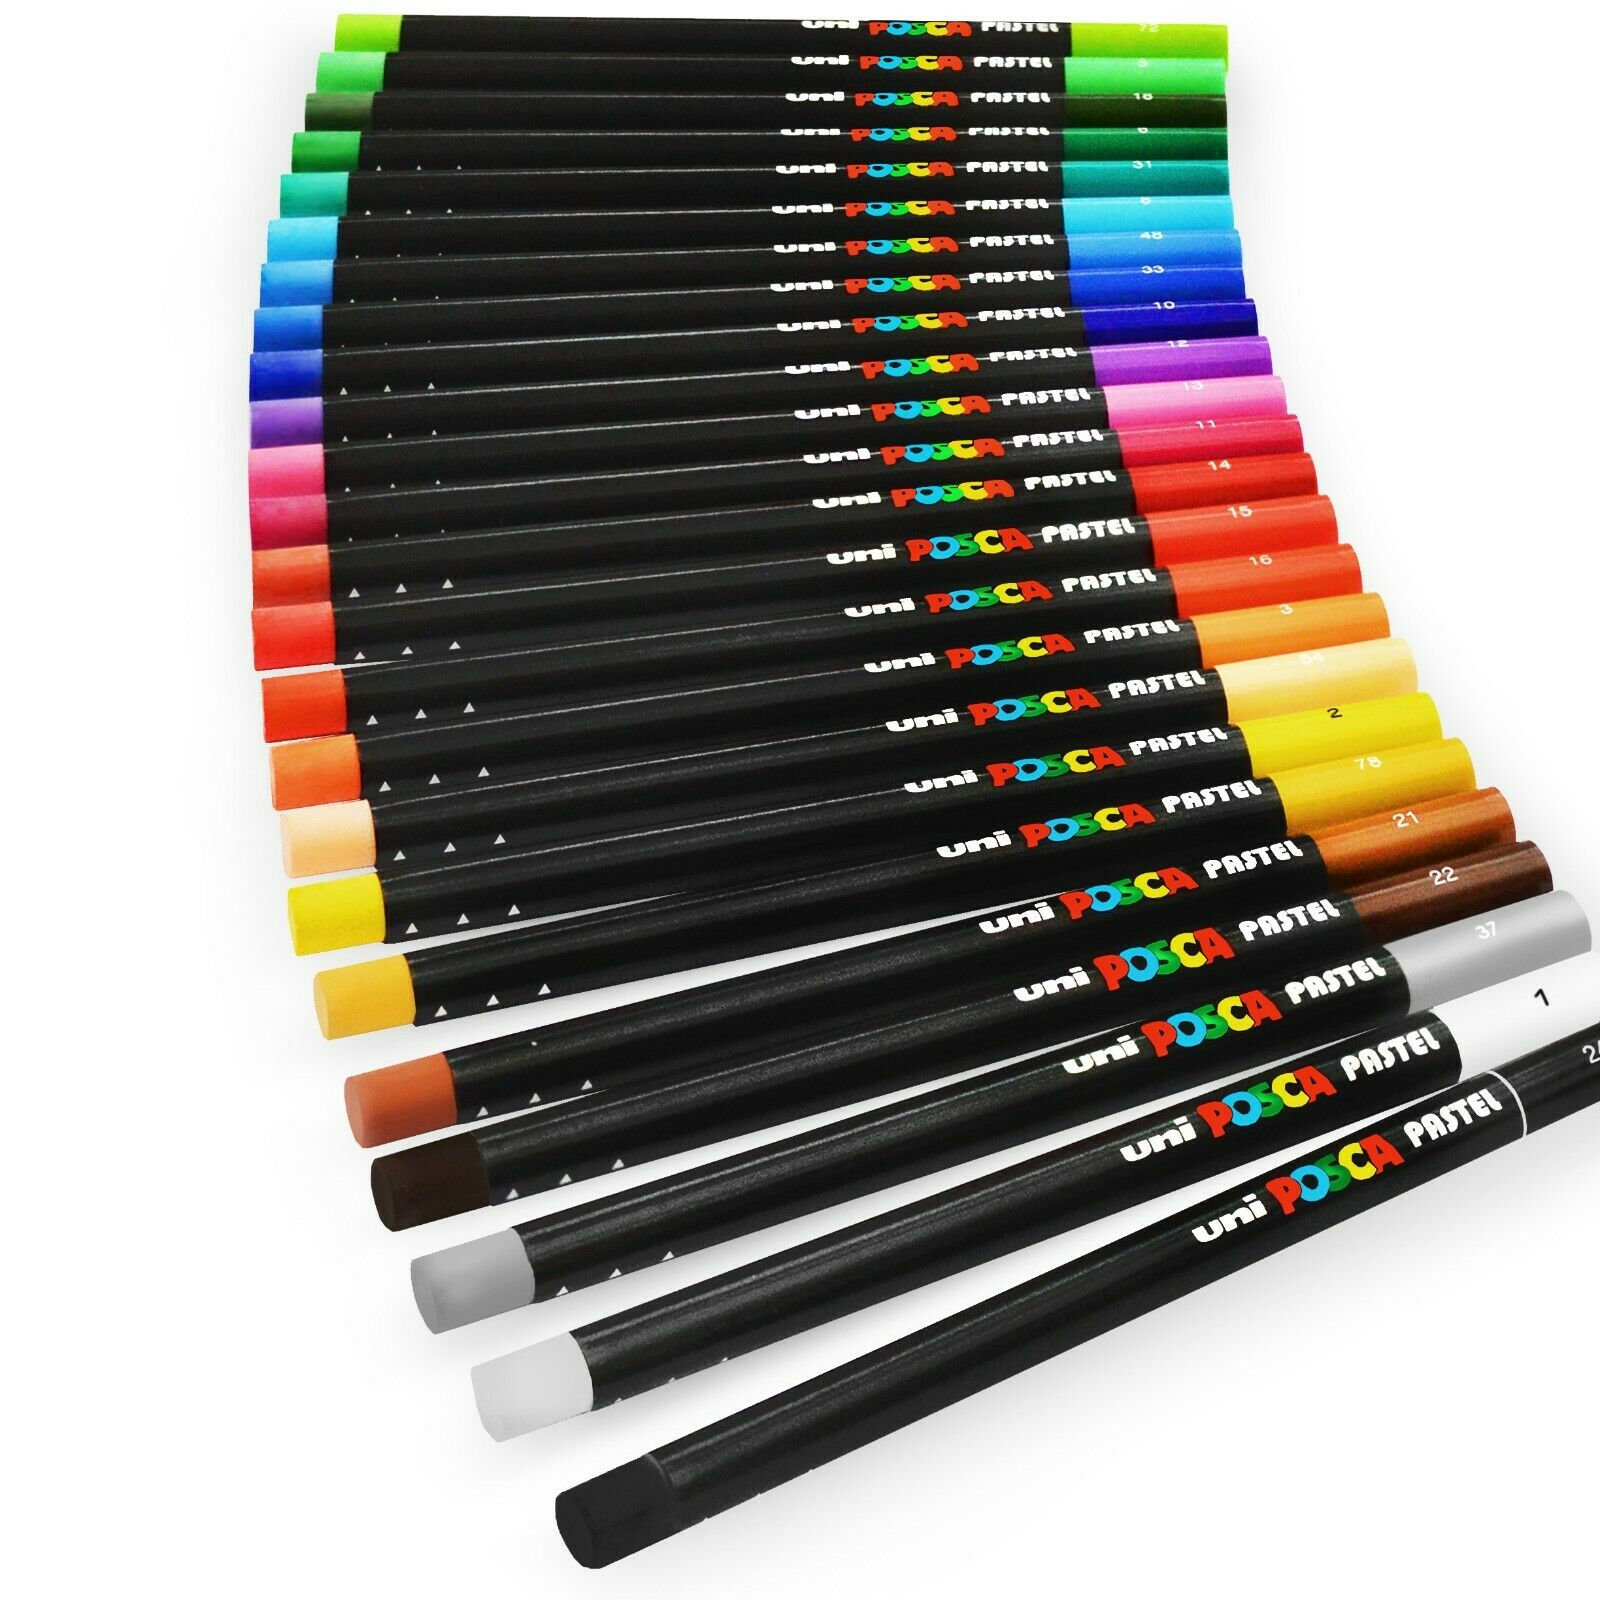 Posca Crayons Art Set of 24 Pastels, Art Supplies